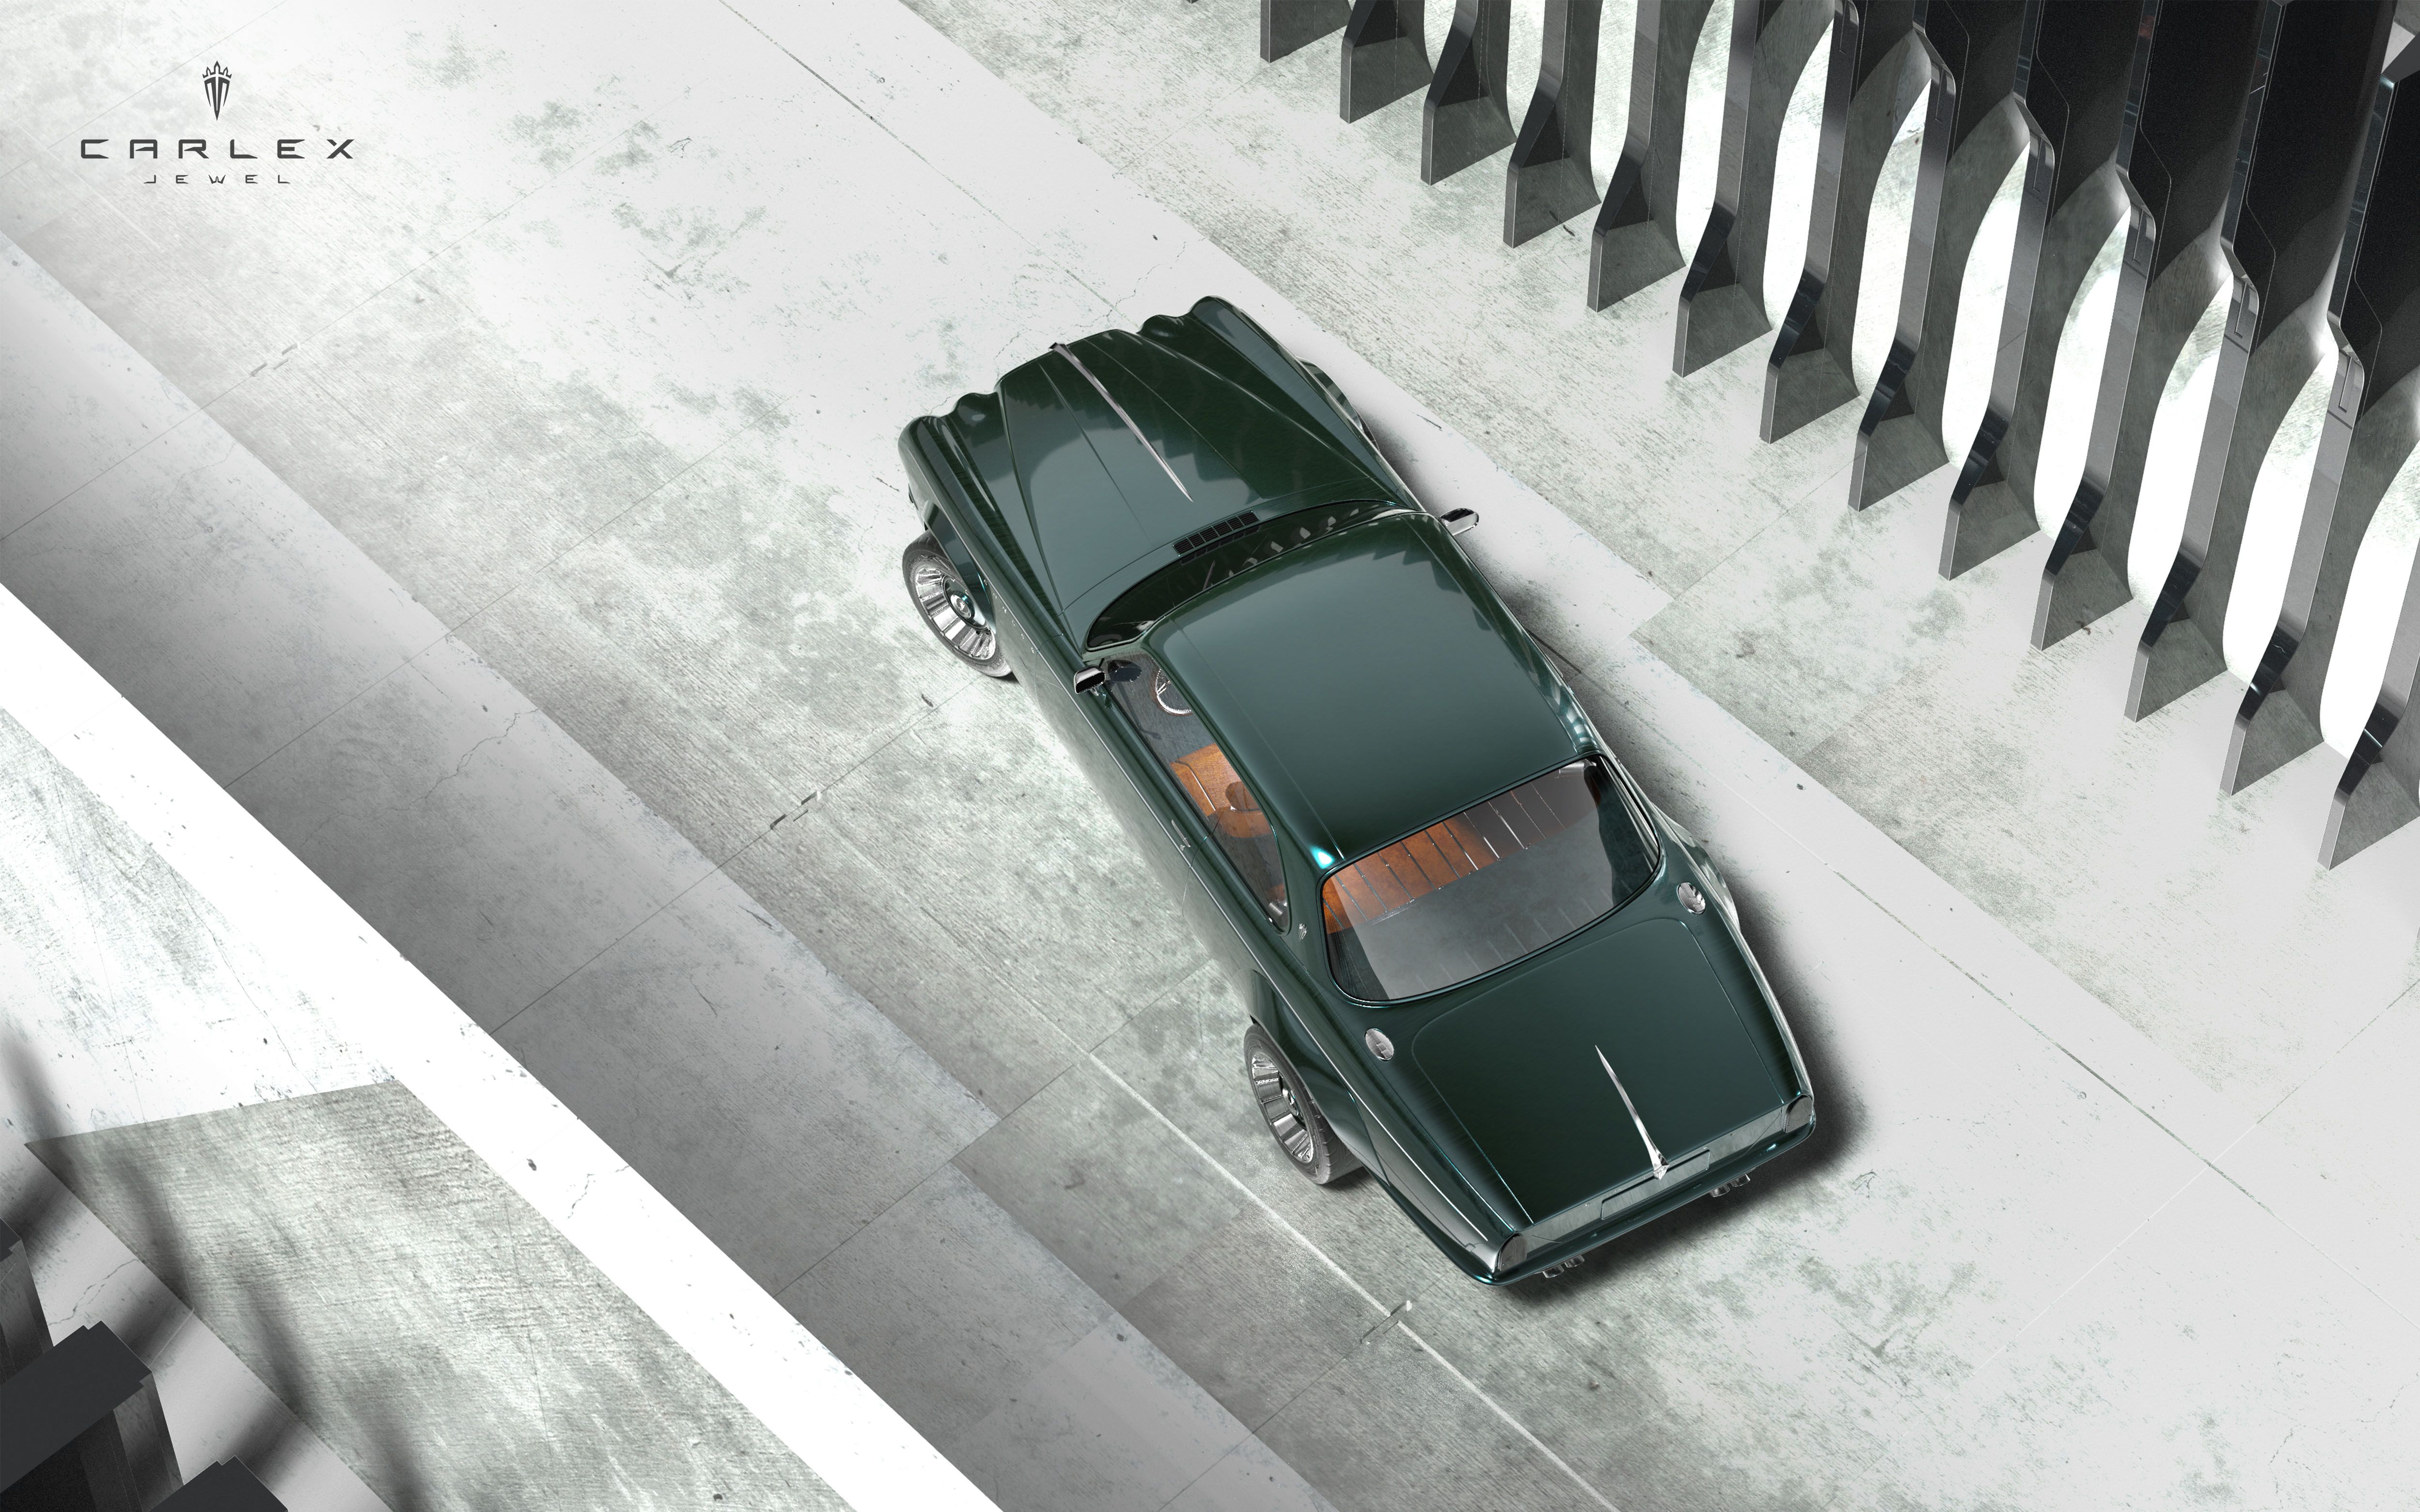 2022 Jaguar XJ-C By Carlex Design